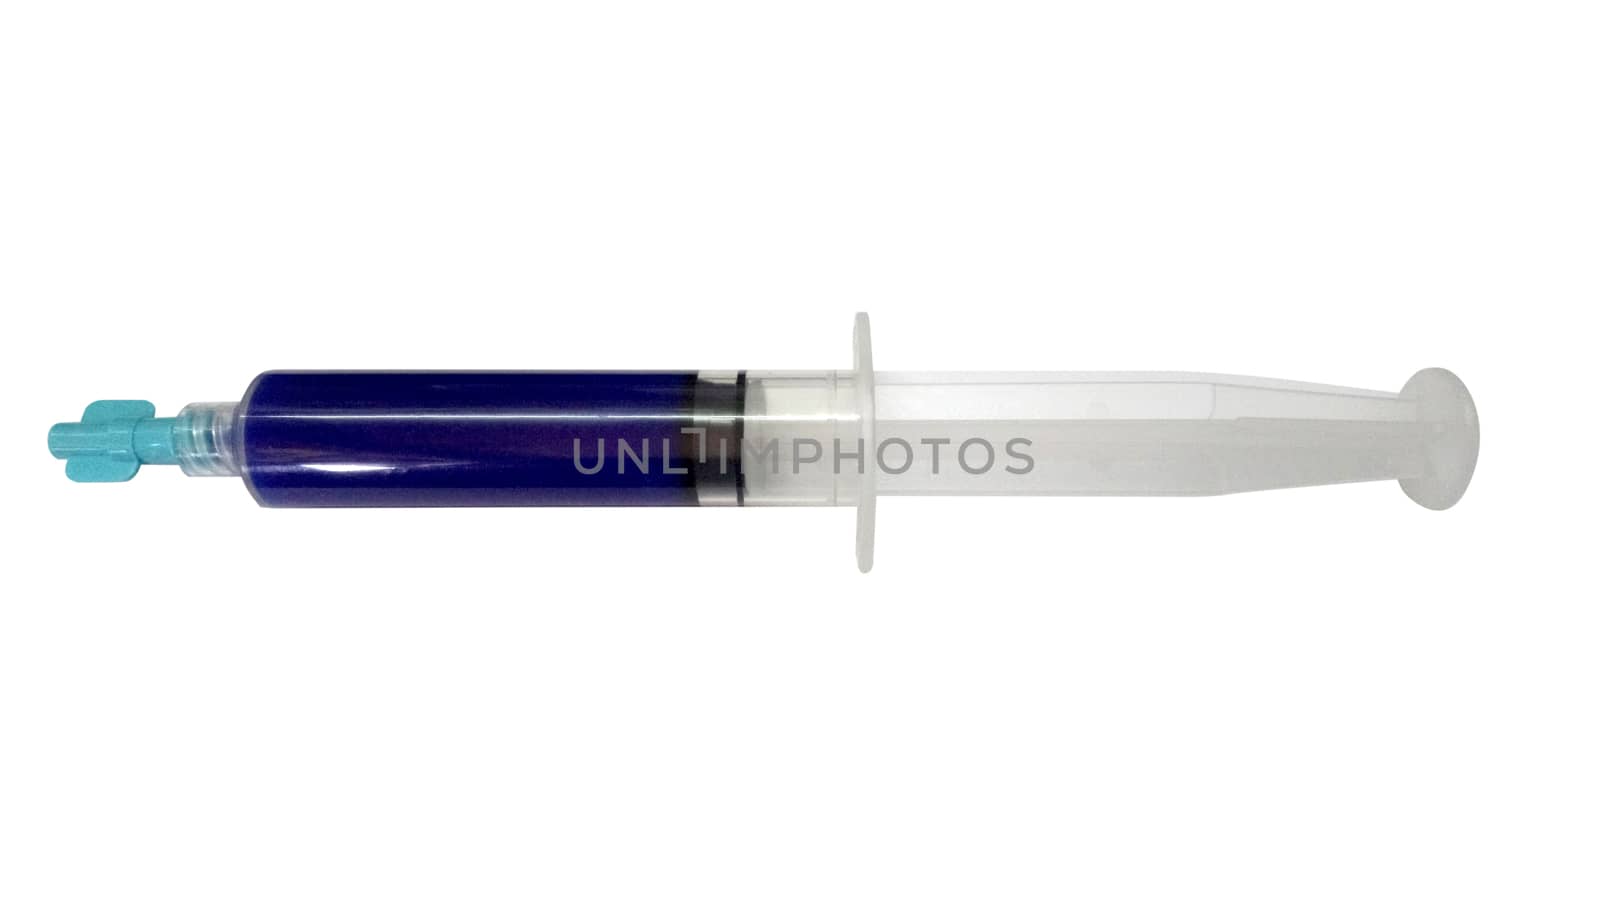 Phosphoric acid etching gel syringe use by the dentistry industry